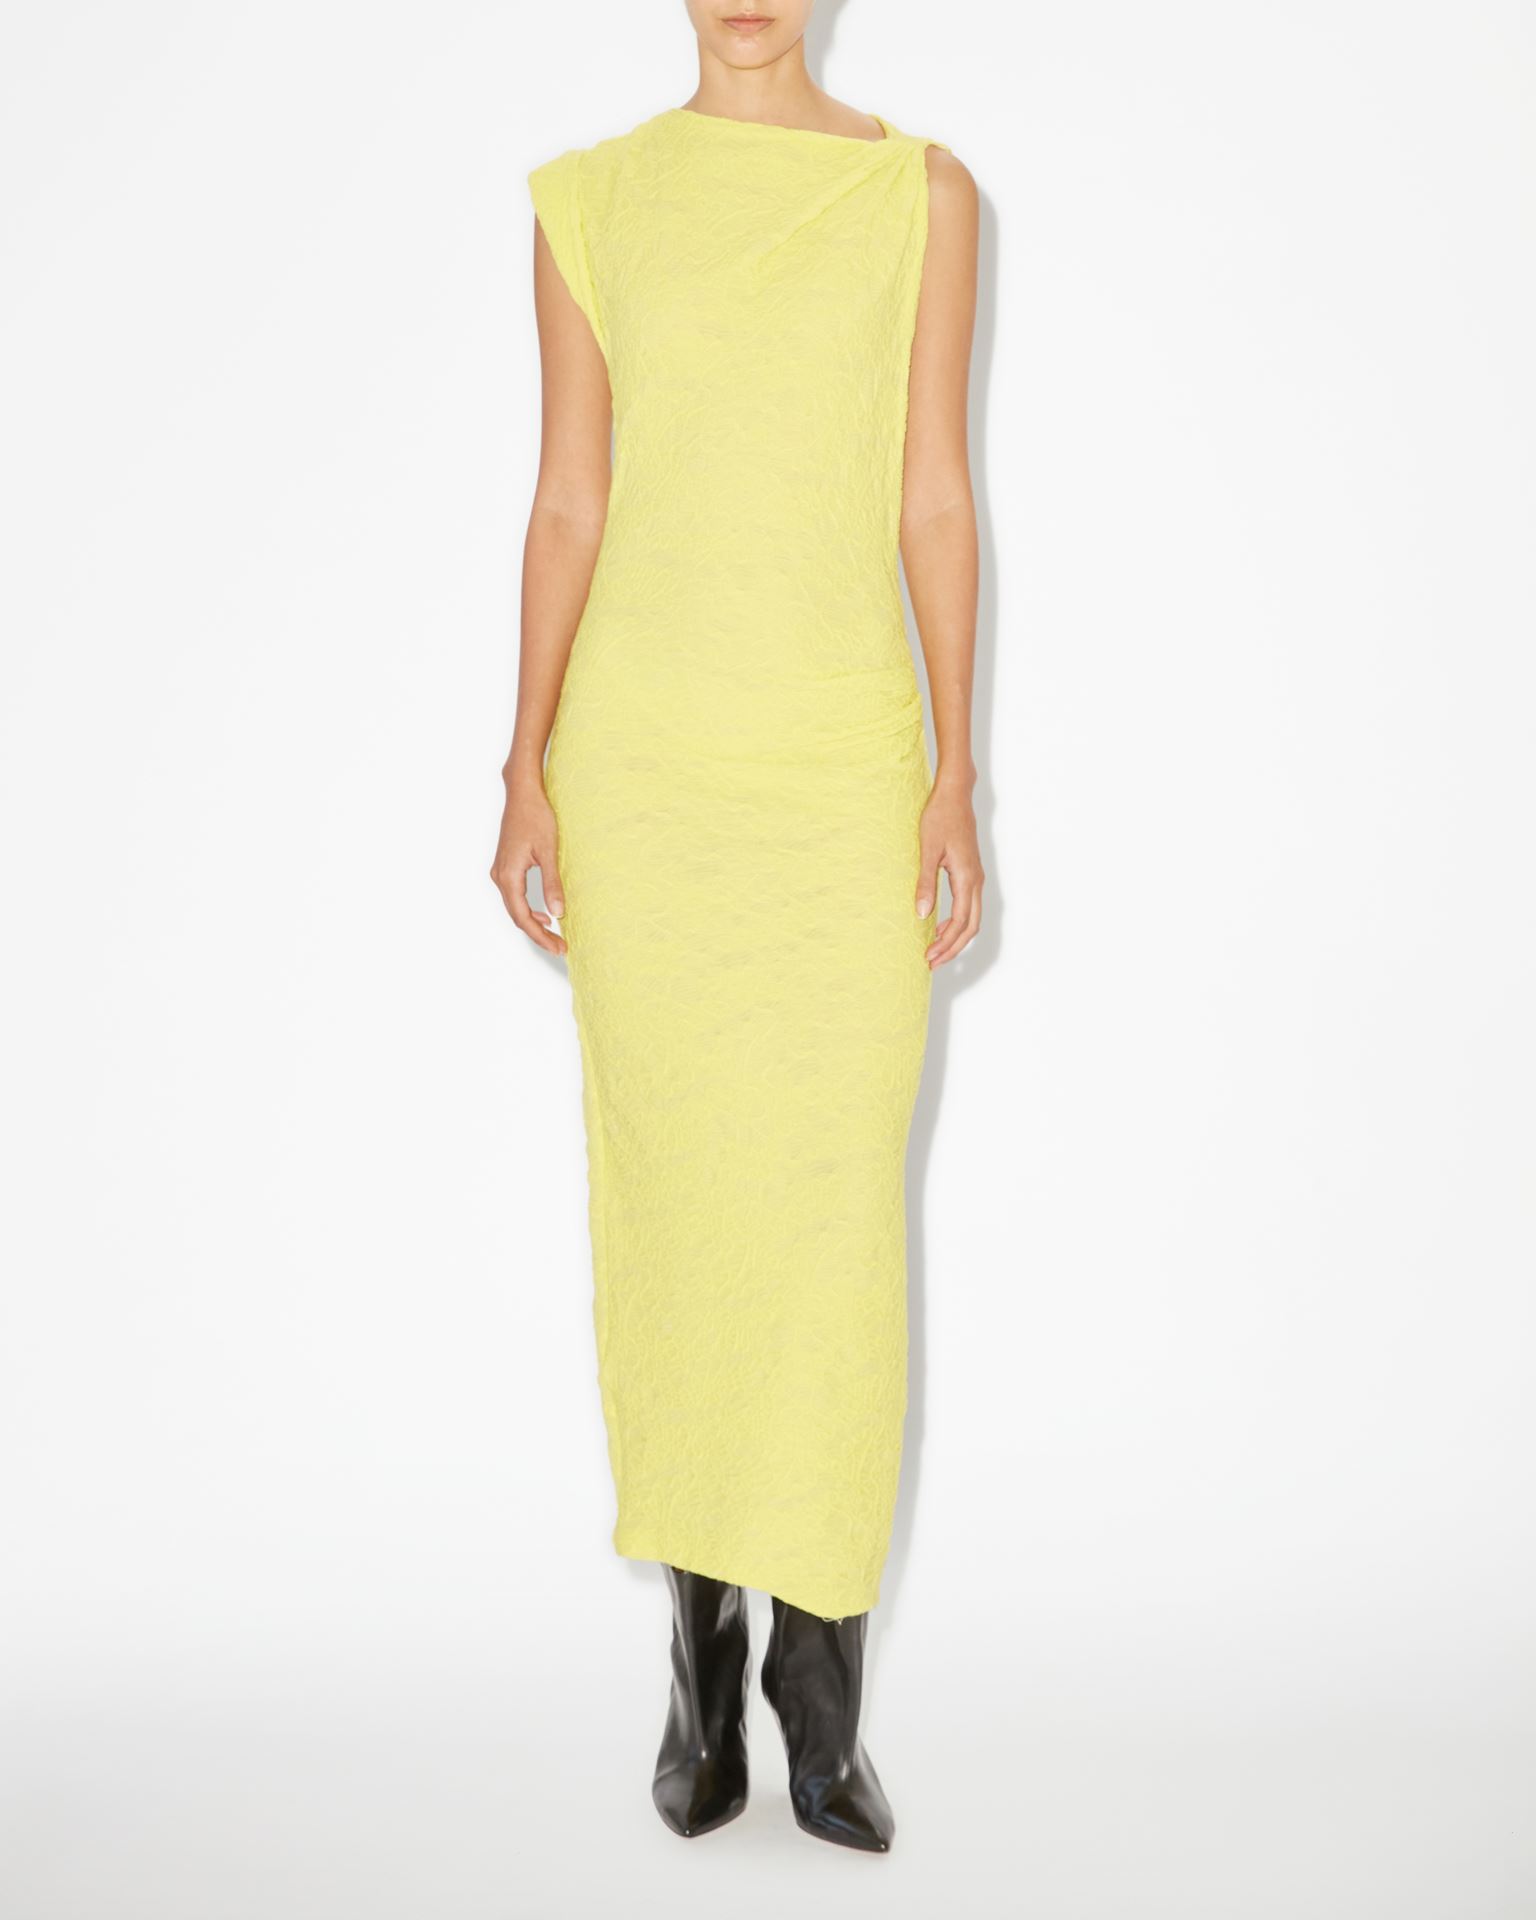 Isabel Marant, Dresses - Women - Yellow